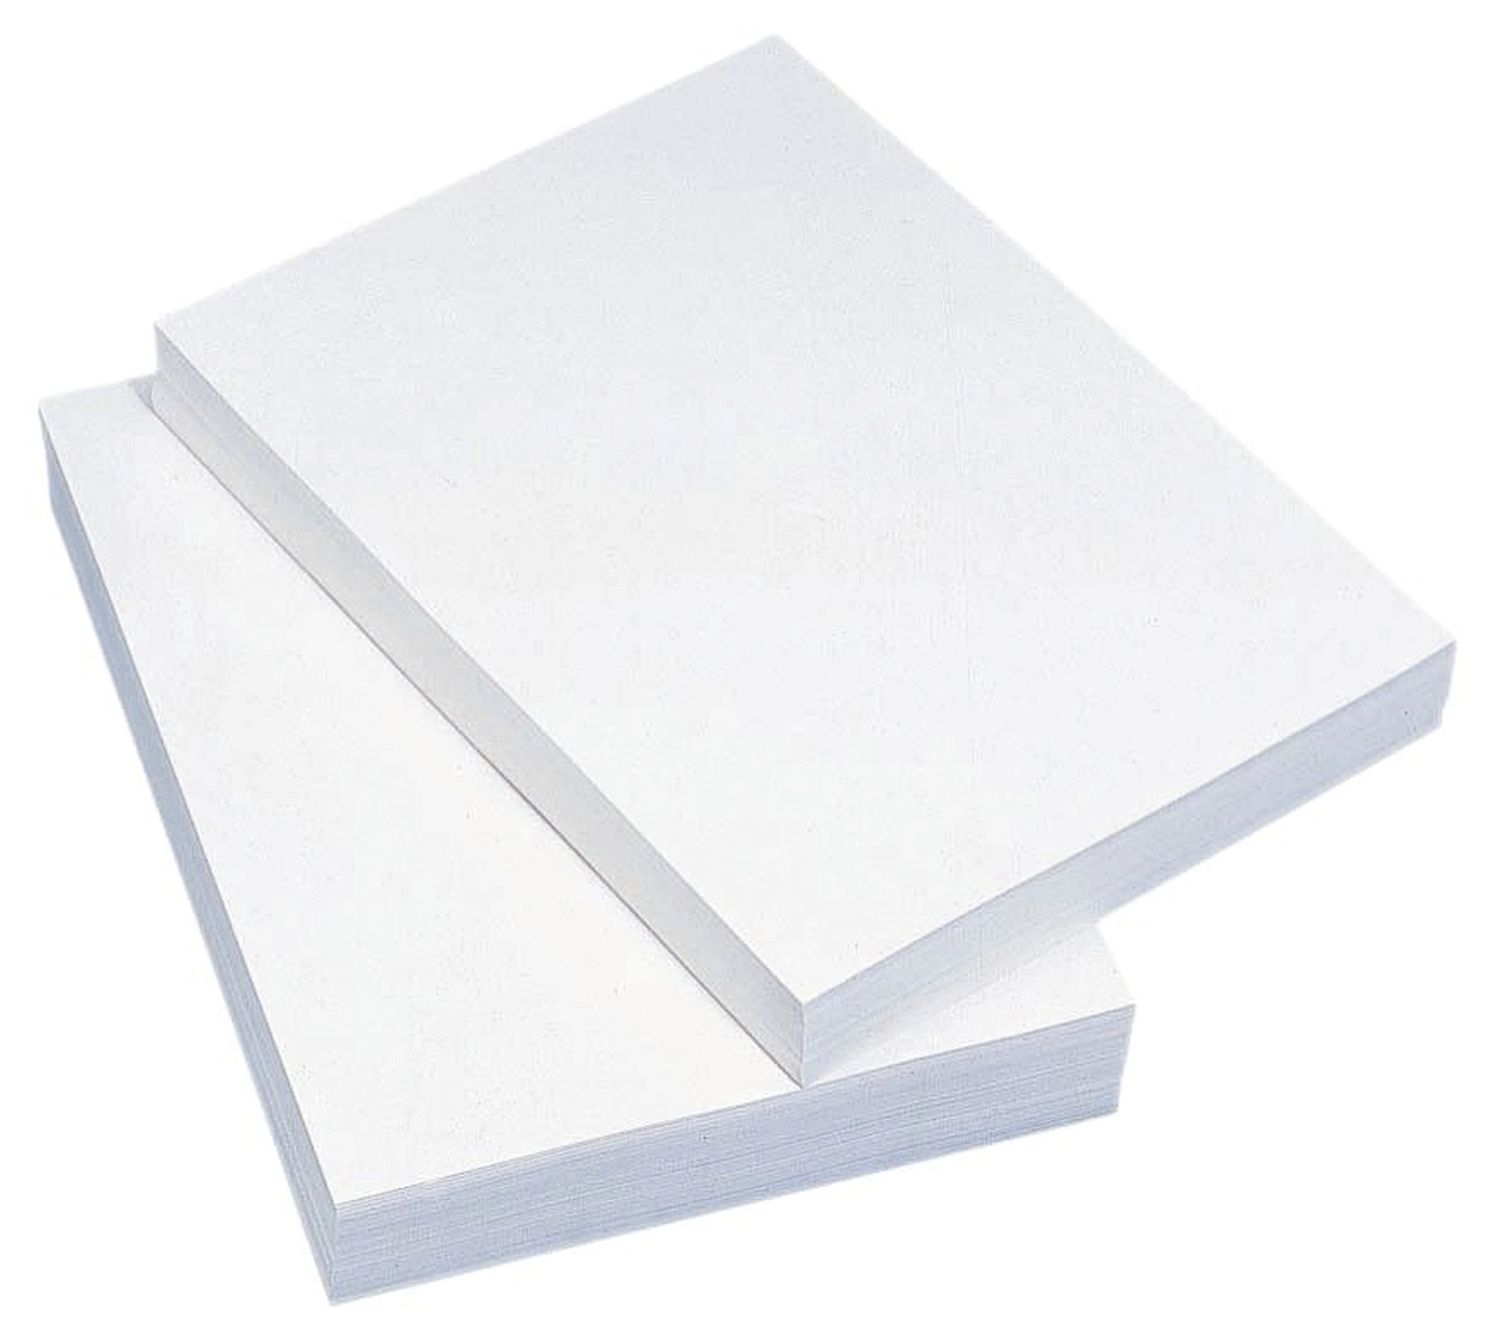 Kopierpapier günstig Standard 8104a80s, DIN A4, 80 g/qm, weiß, 1 Palette mit 100.000 Blatt